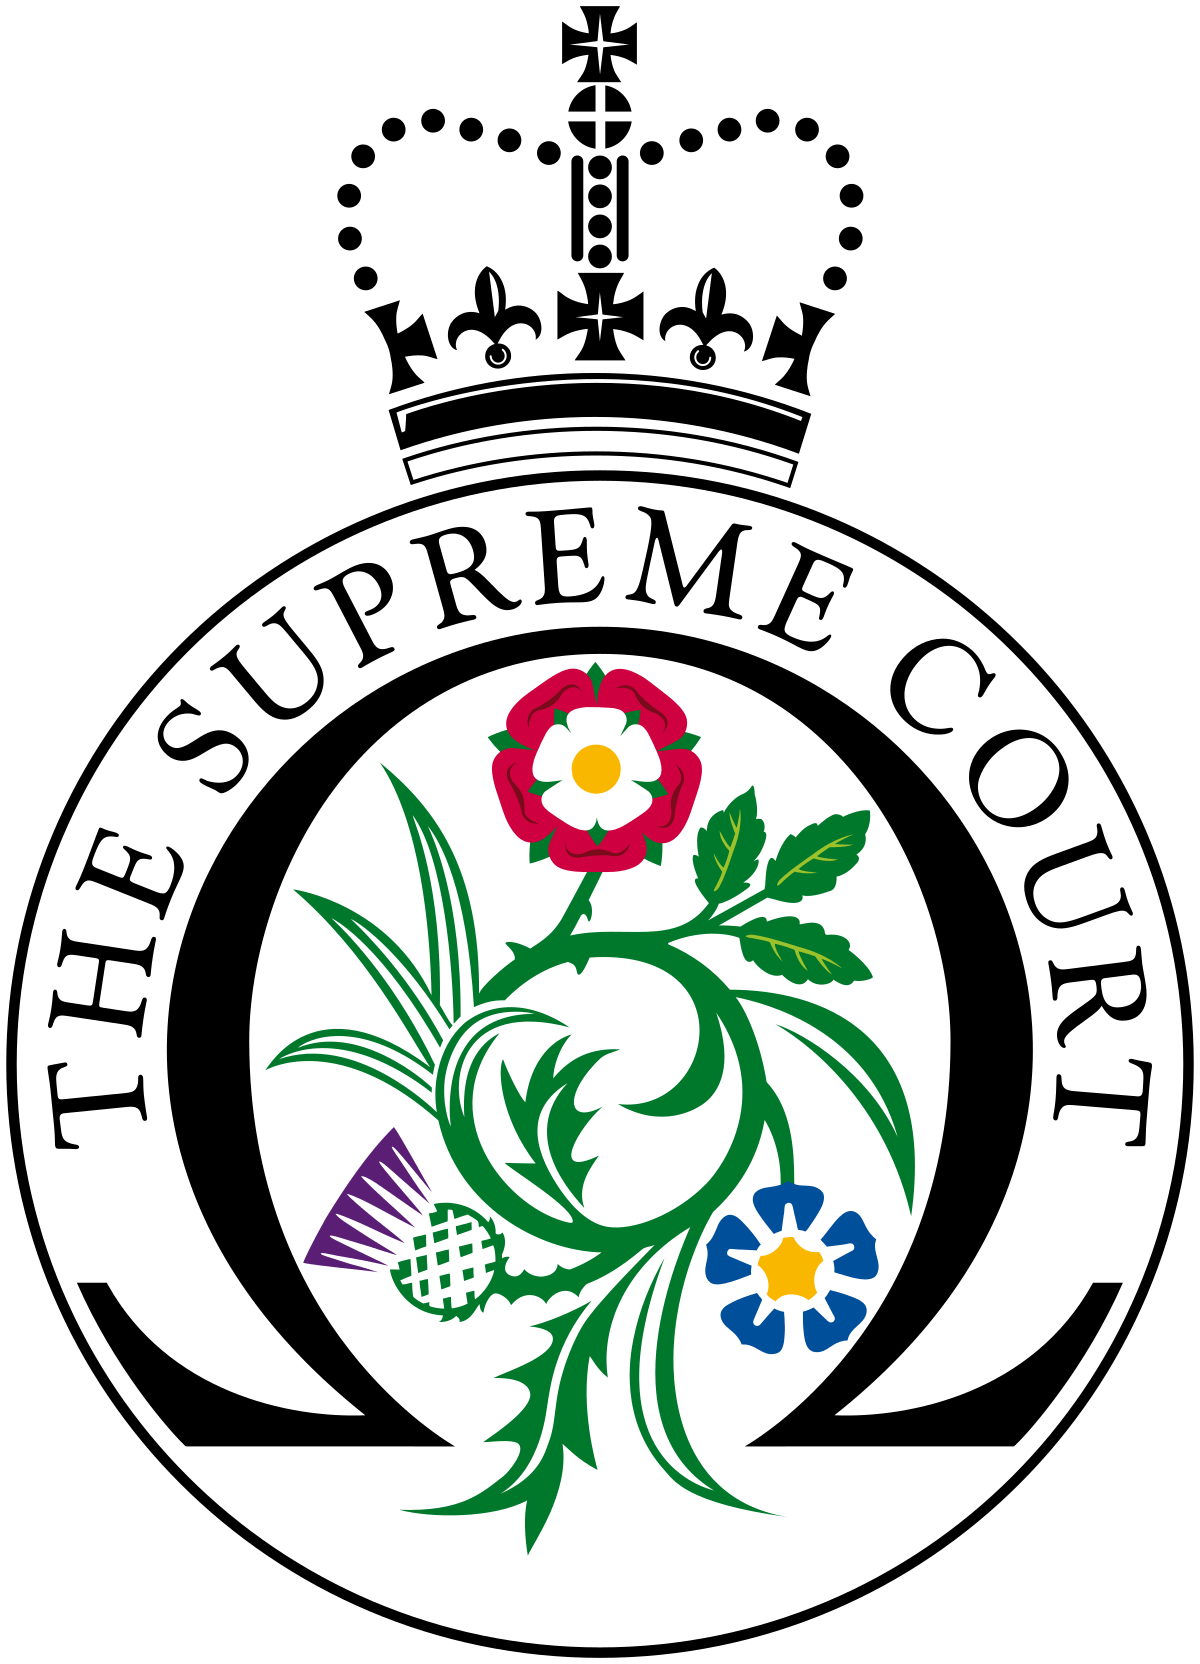 Supreme Court Logo - Supreme Court of the United Kingdom